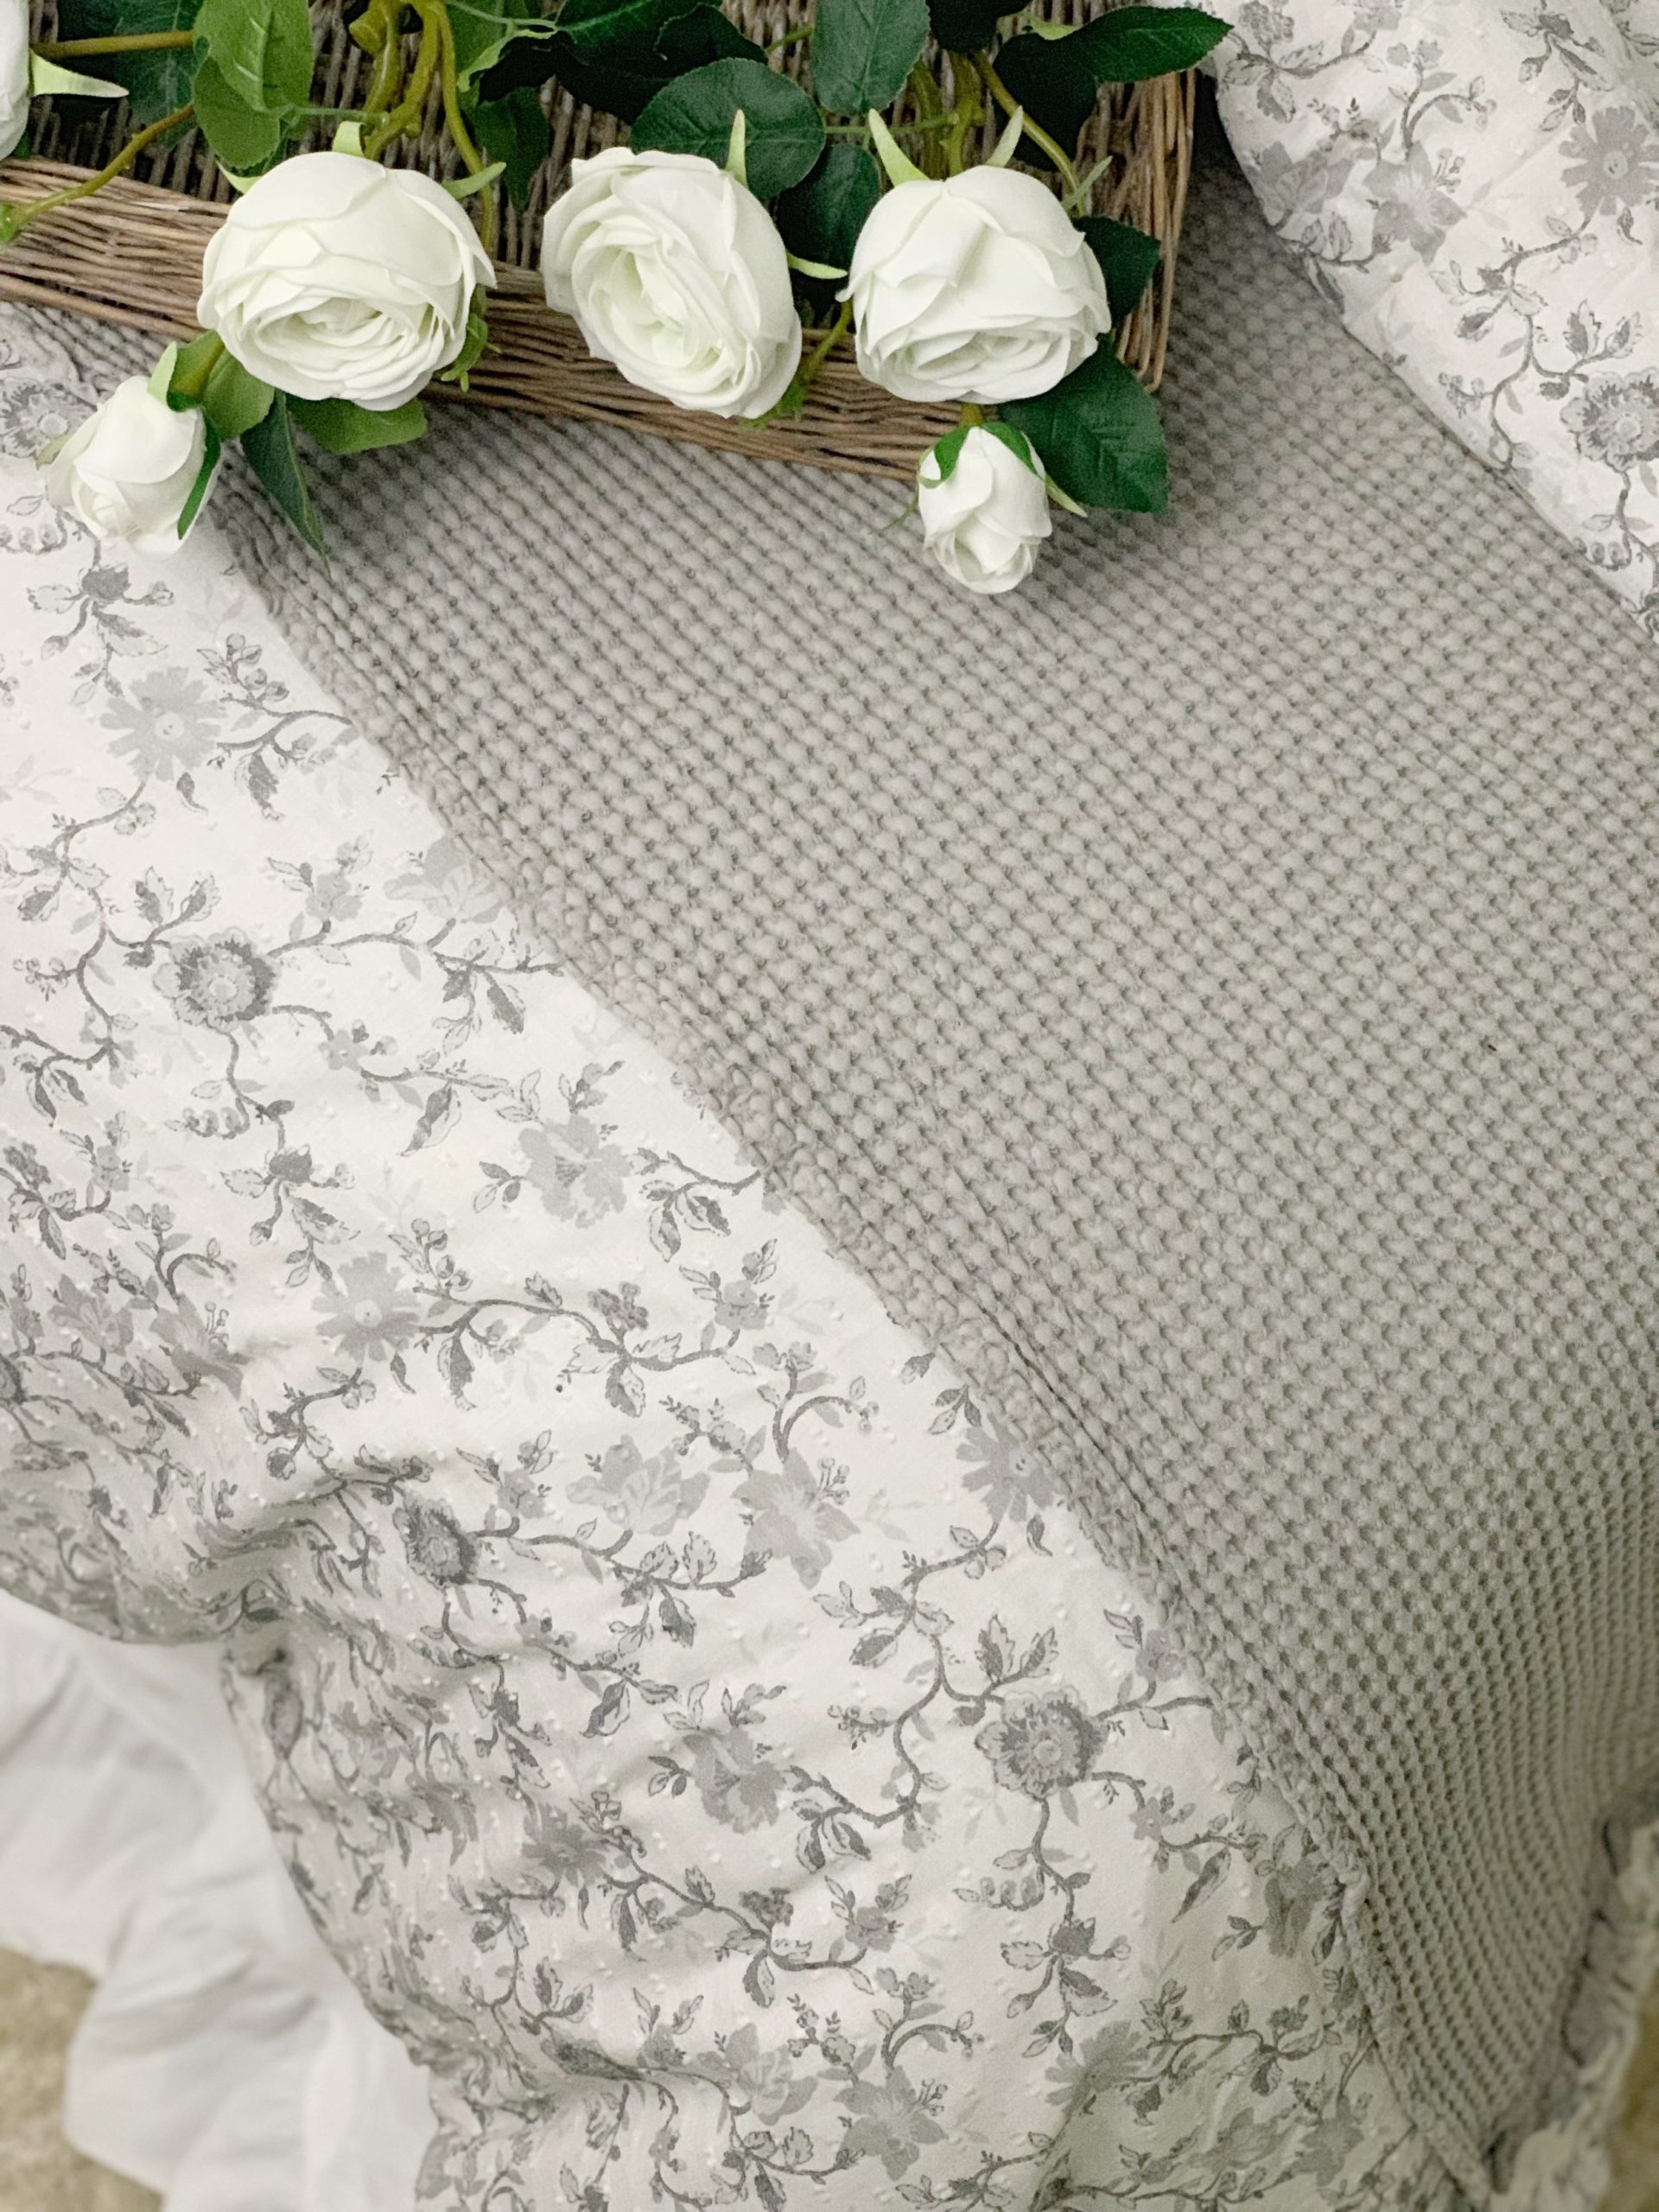 Blanc Mariclo' curtain series Spring Time gray decor